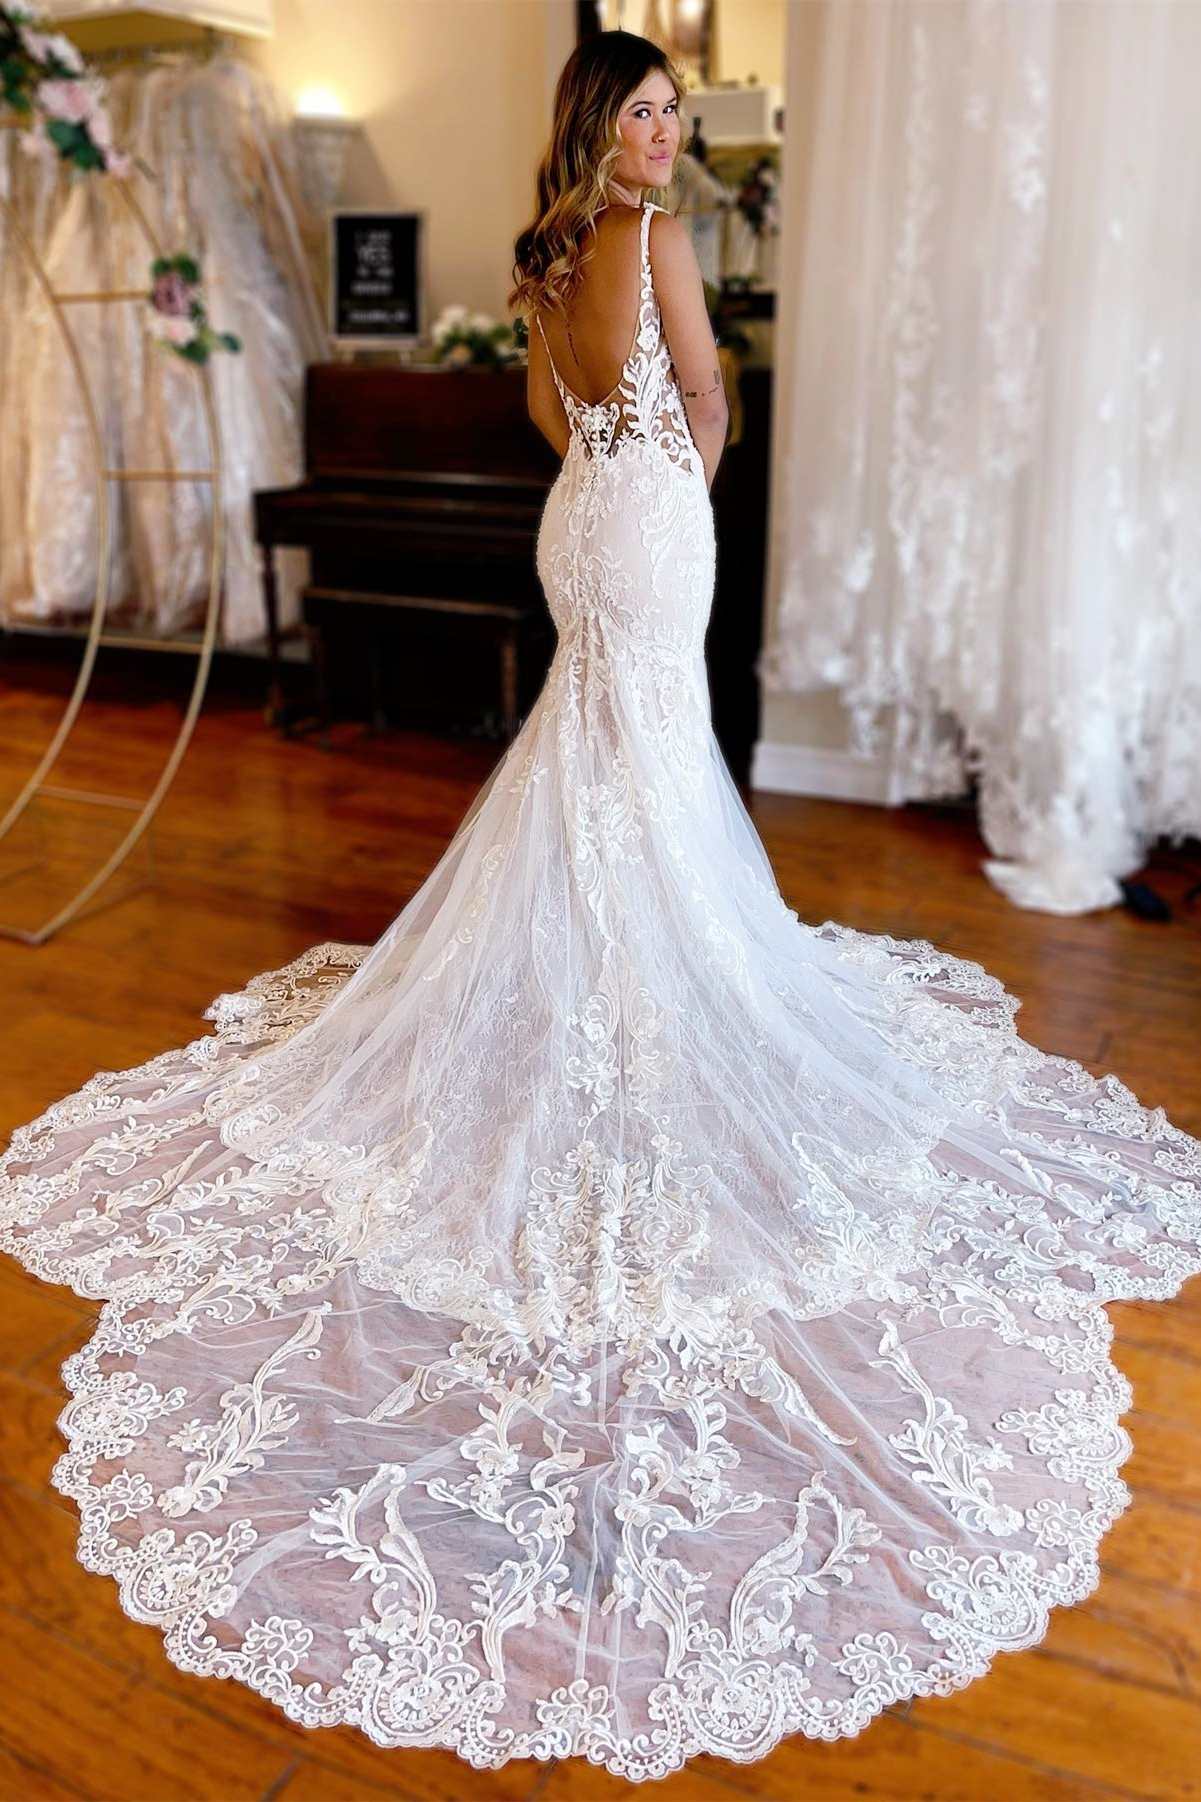 White Lace Plunge V Backless Trumpet Long Wedding Dress